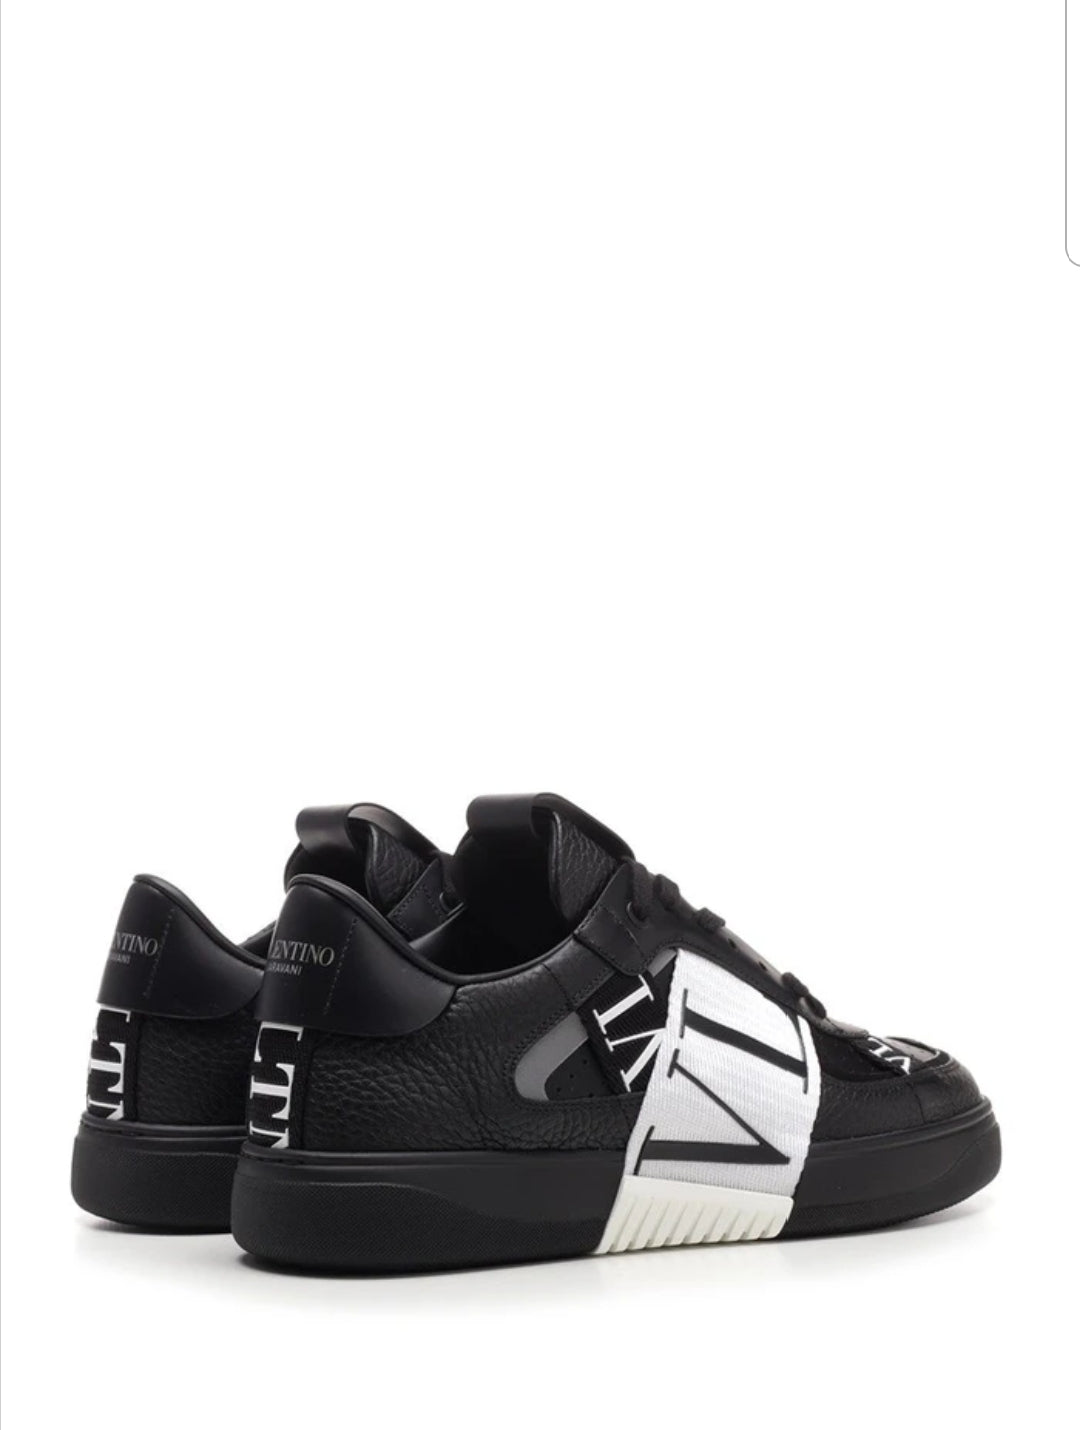 valentino garavani black sneakers